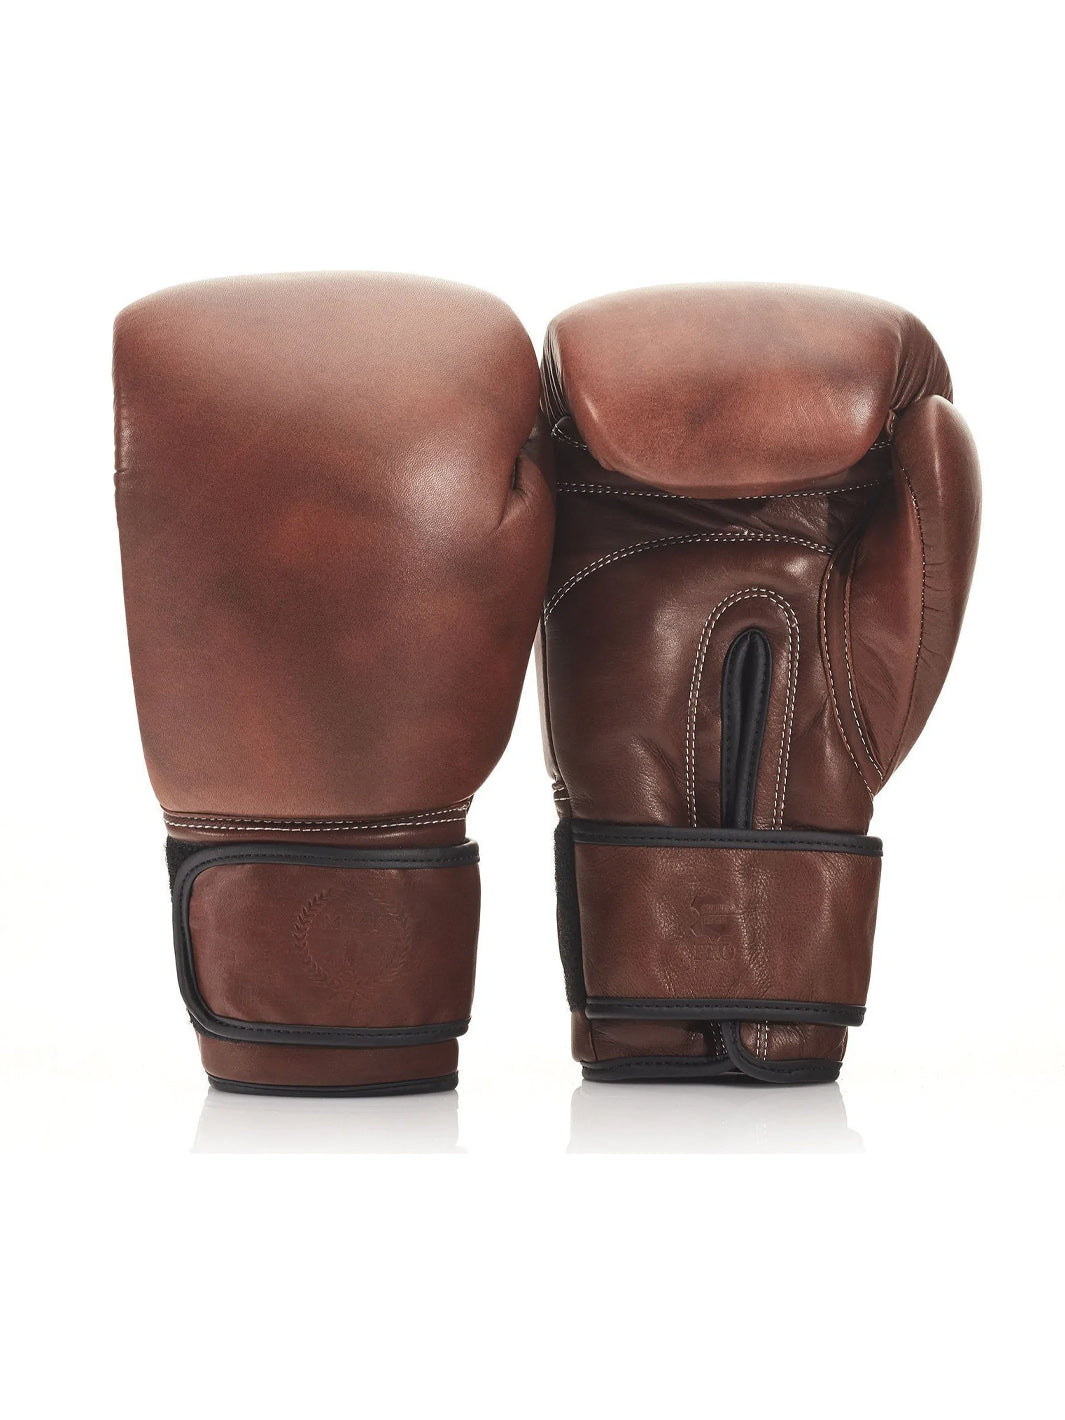 MVP Pro Boxing Gloves - Brown